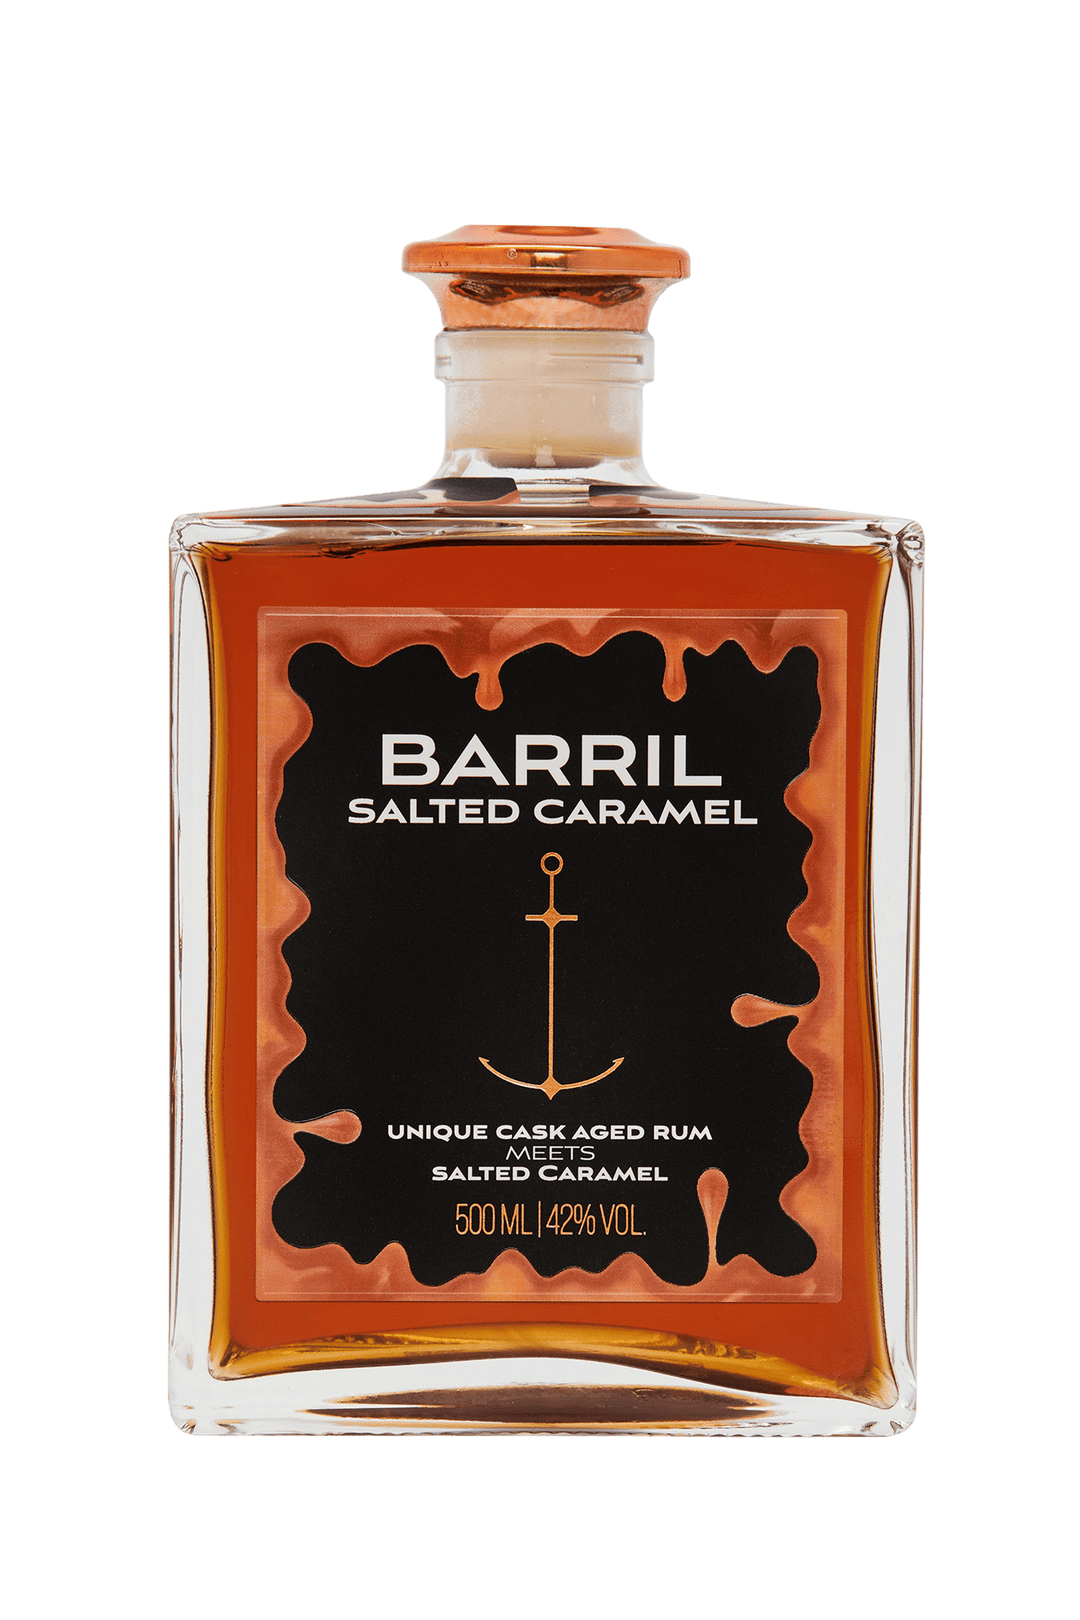 Barril Salted Caramel Cask Aged Rum